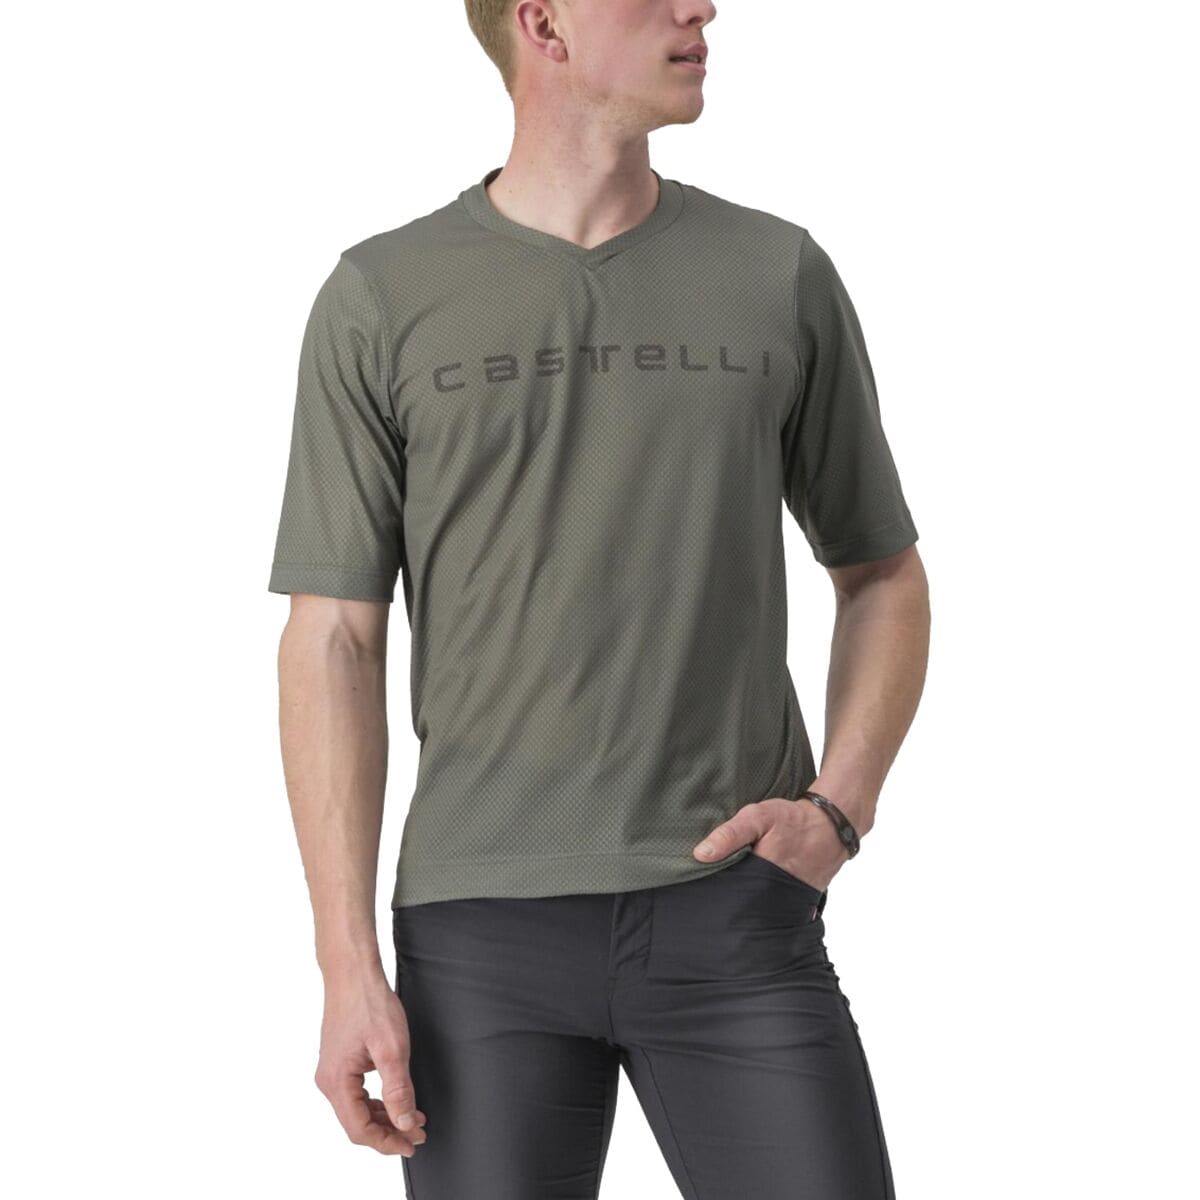 Trail Tech 2 T-Shirt - Men